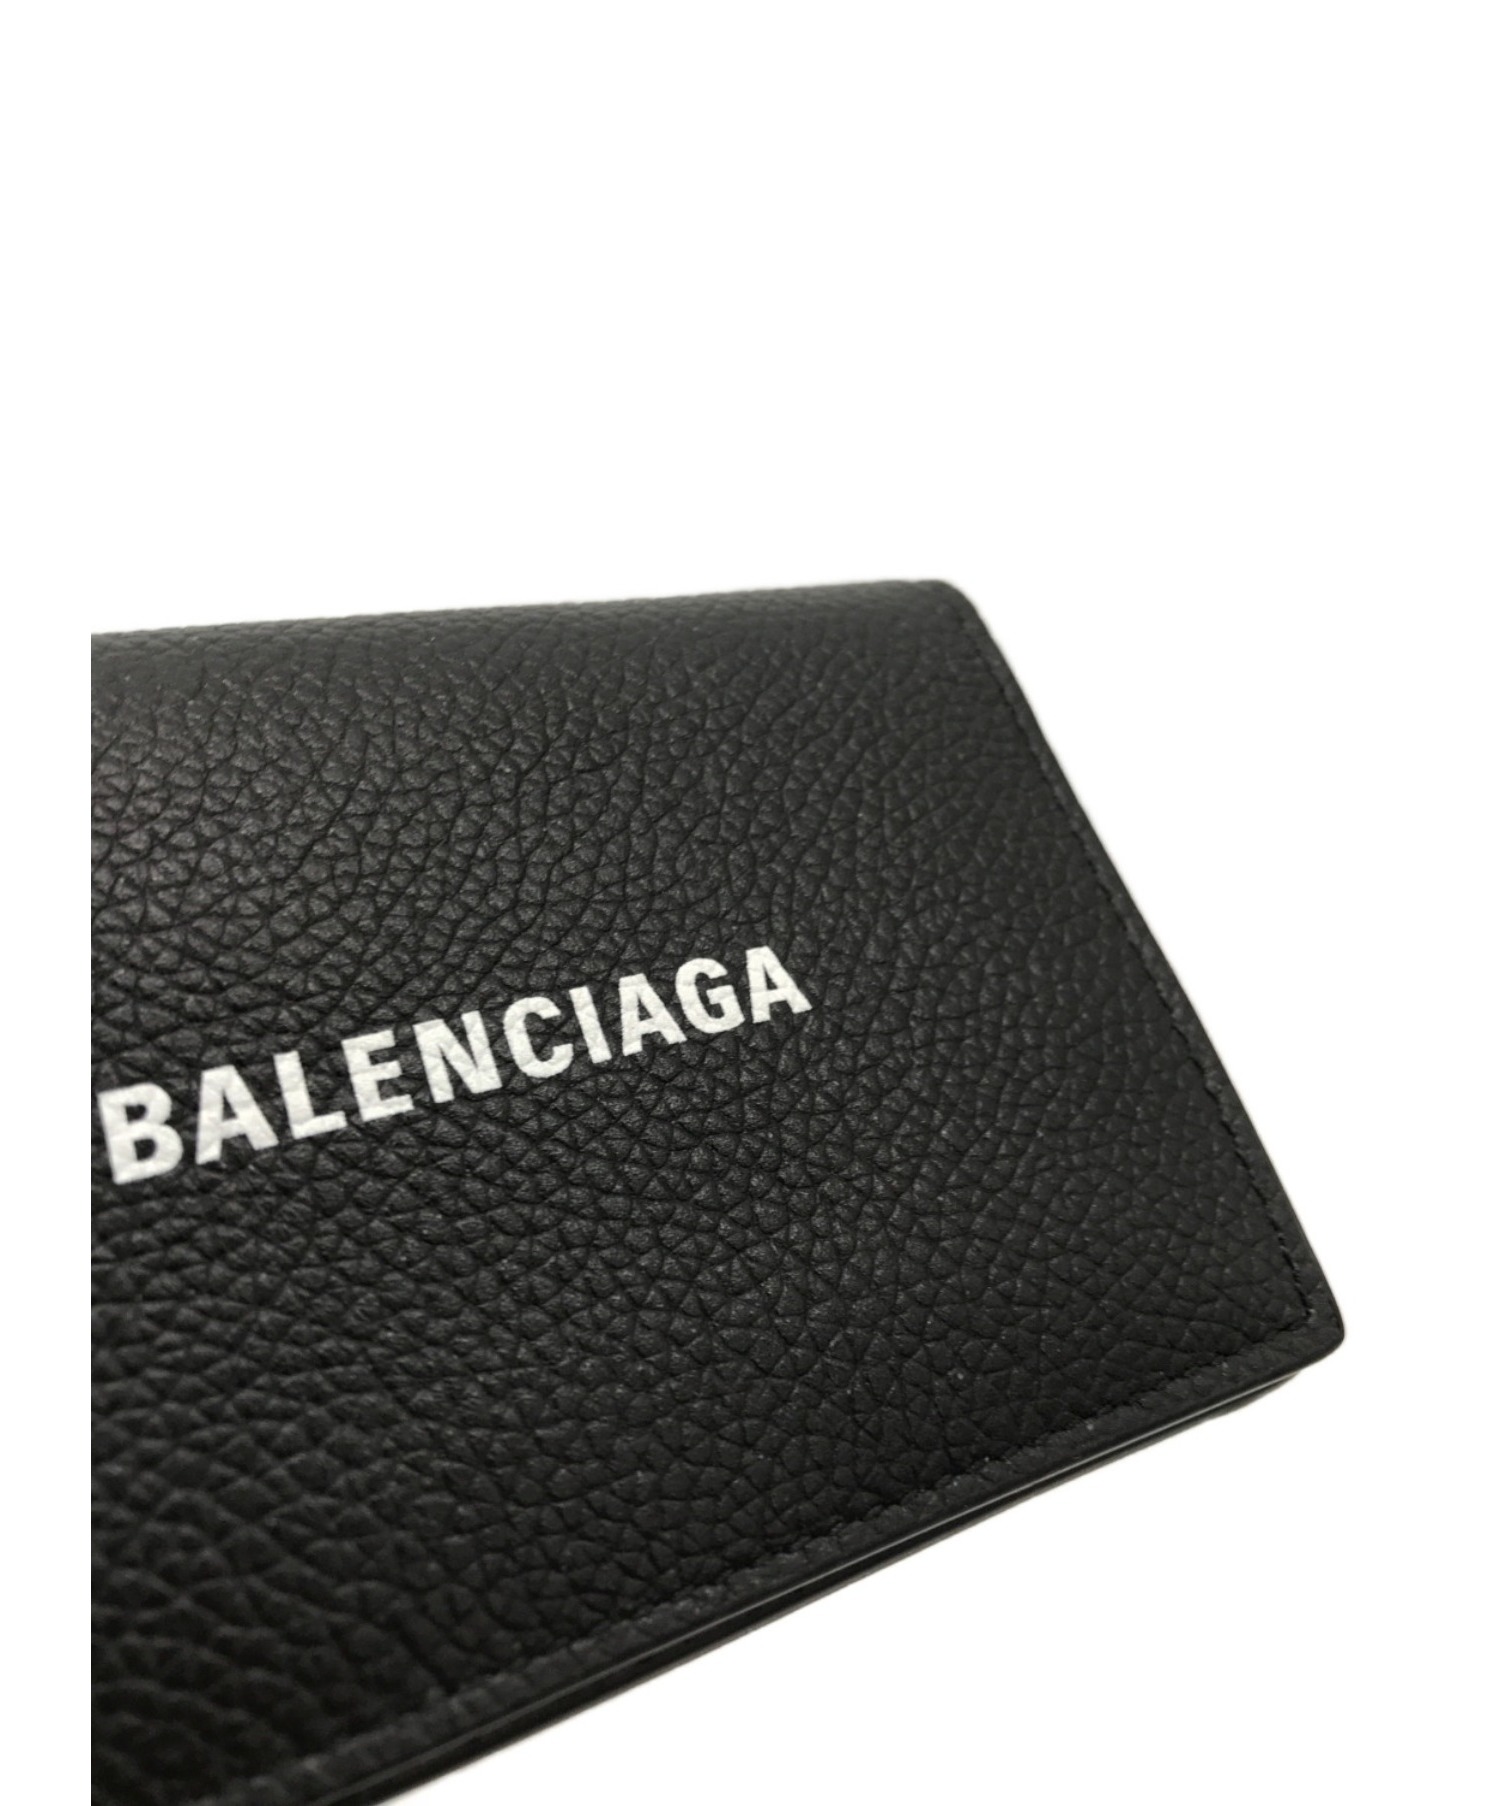 BALENCIAGA (バレンシアガ) カードケース ブラック 645508 1090U 584046